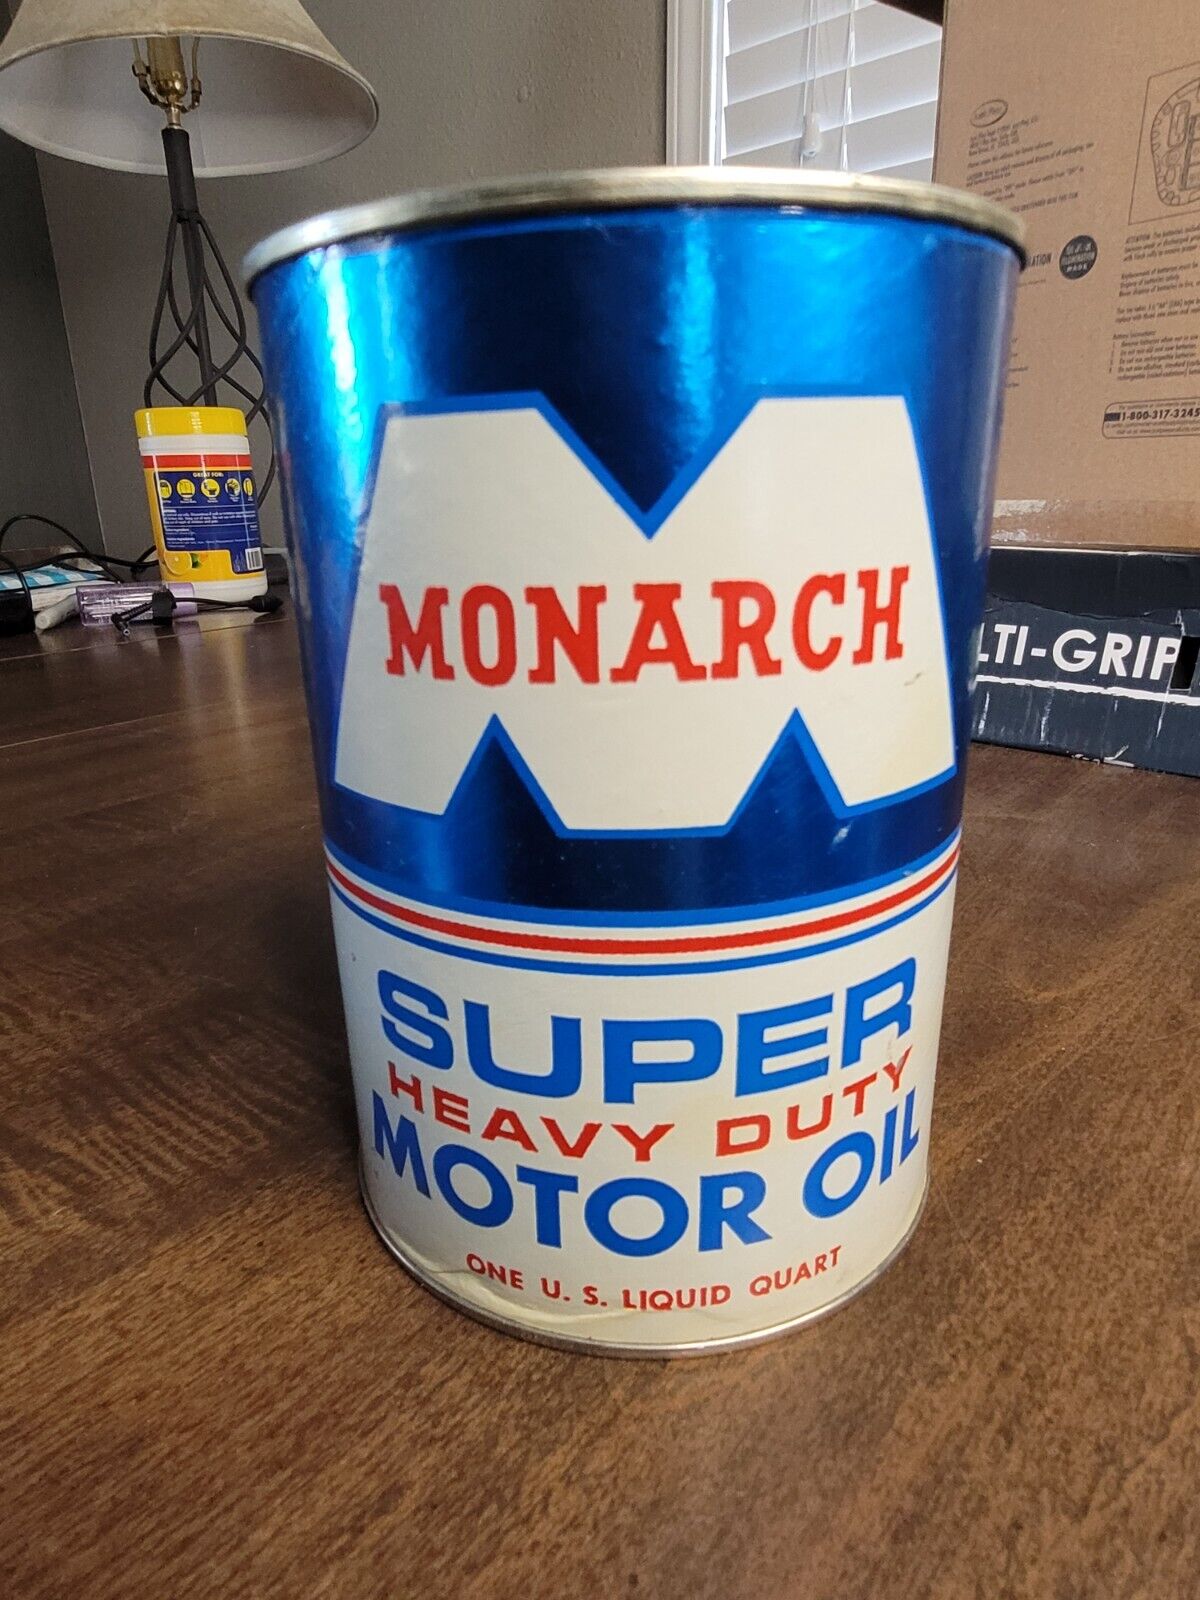 *RARE* Vintage Monarch Super Heavy Duty Motor Oil 1Q Can Filled w/Original Oil